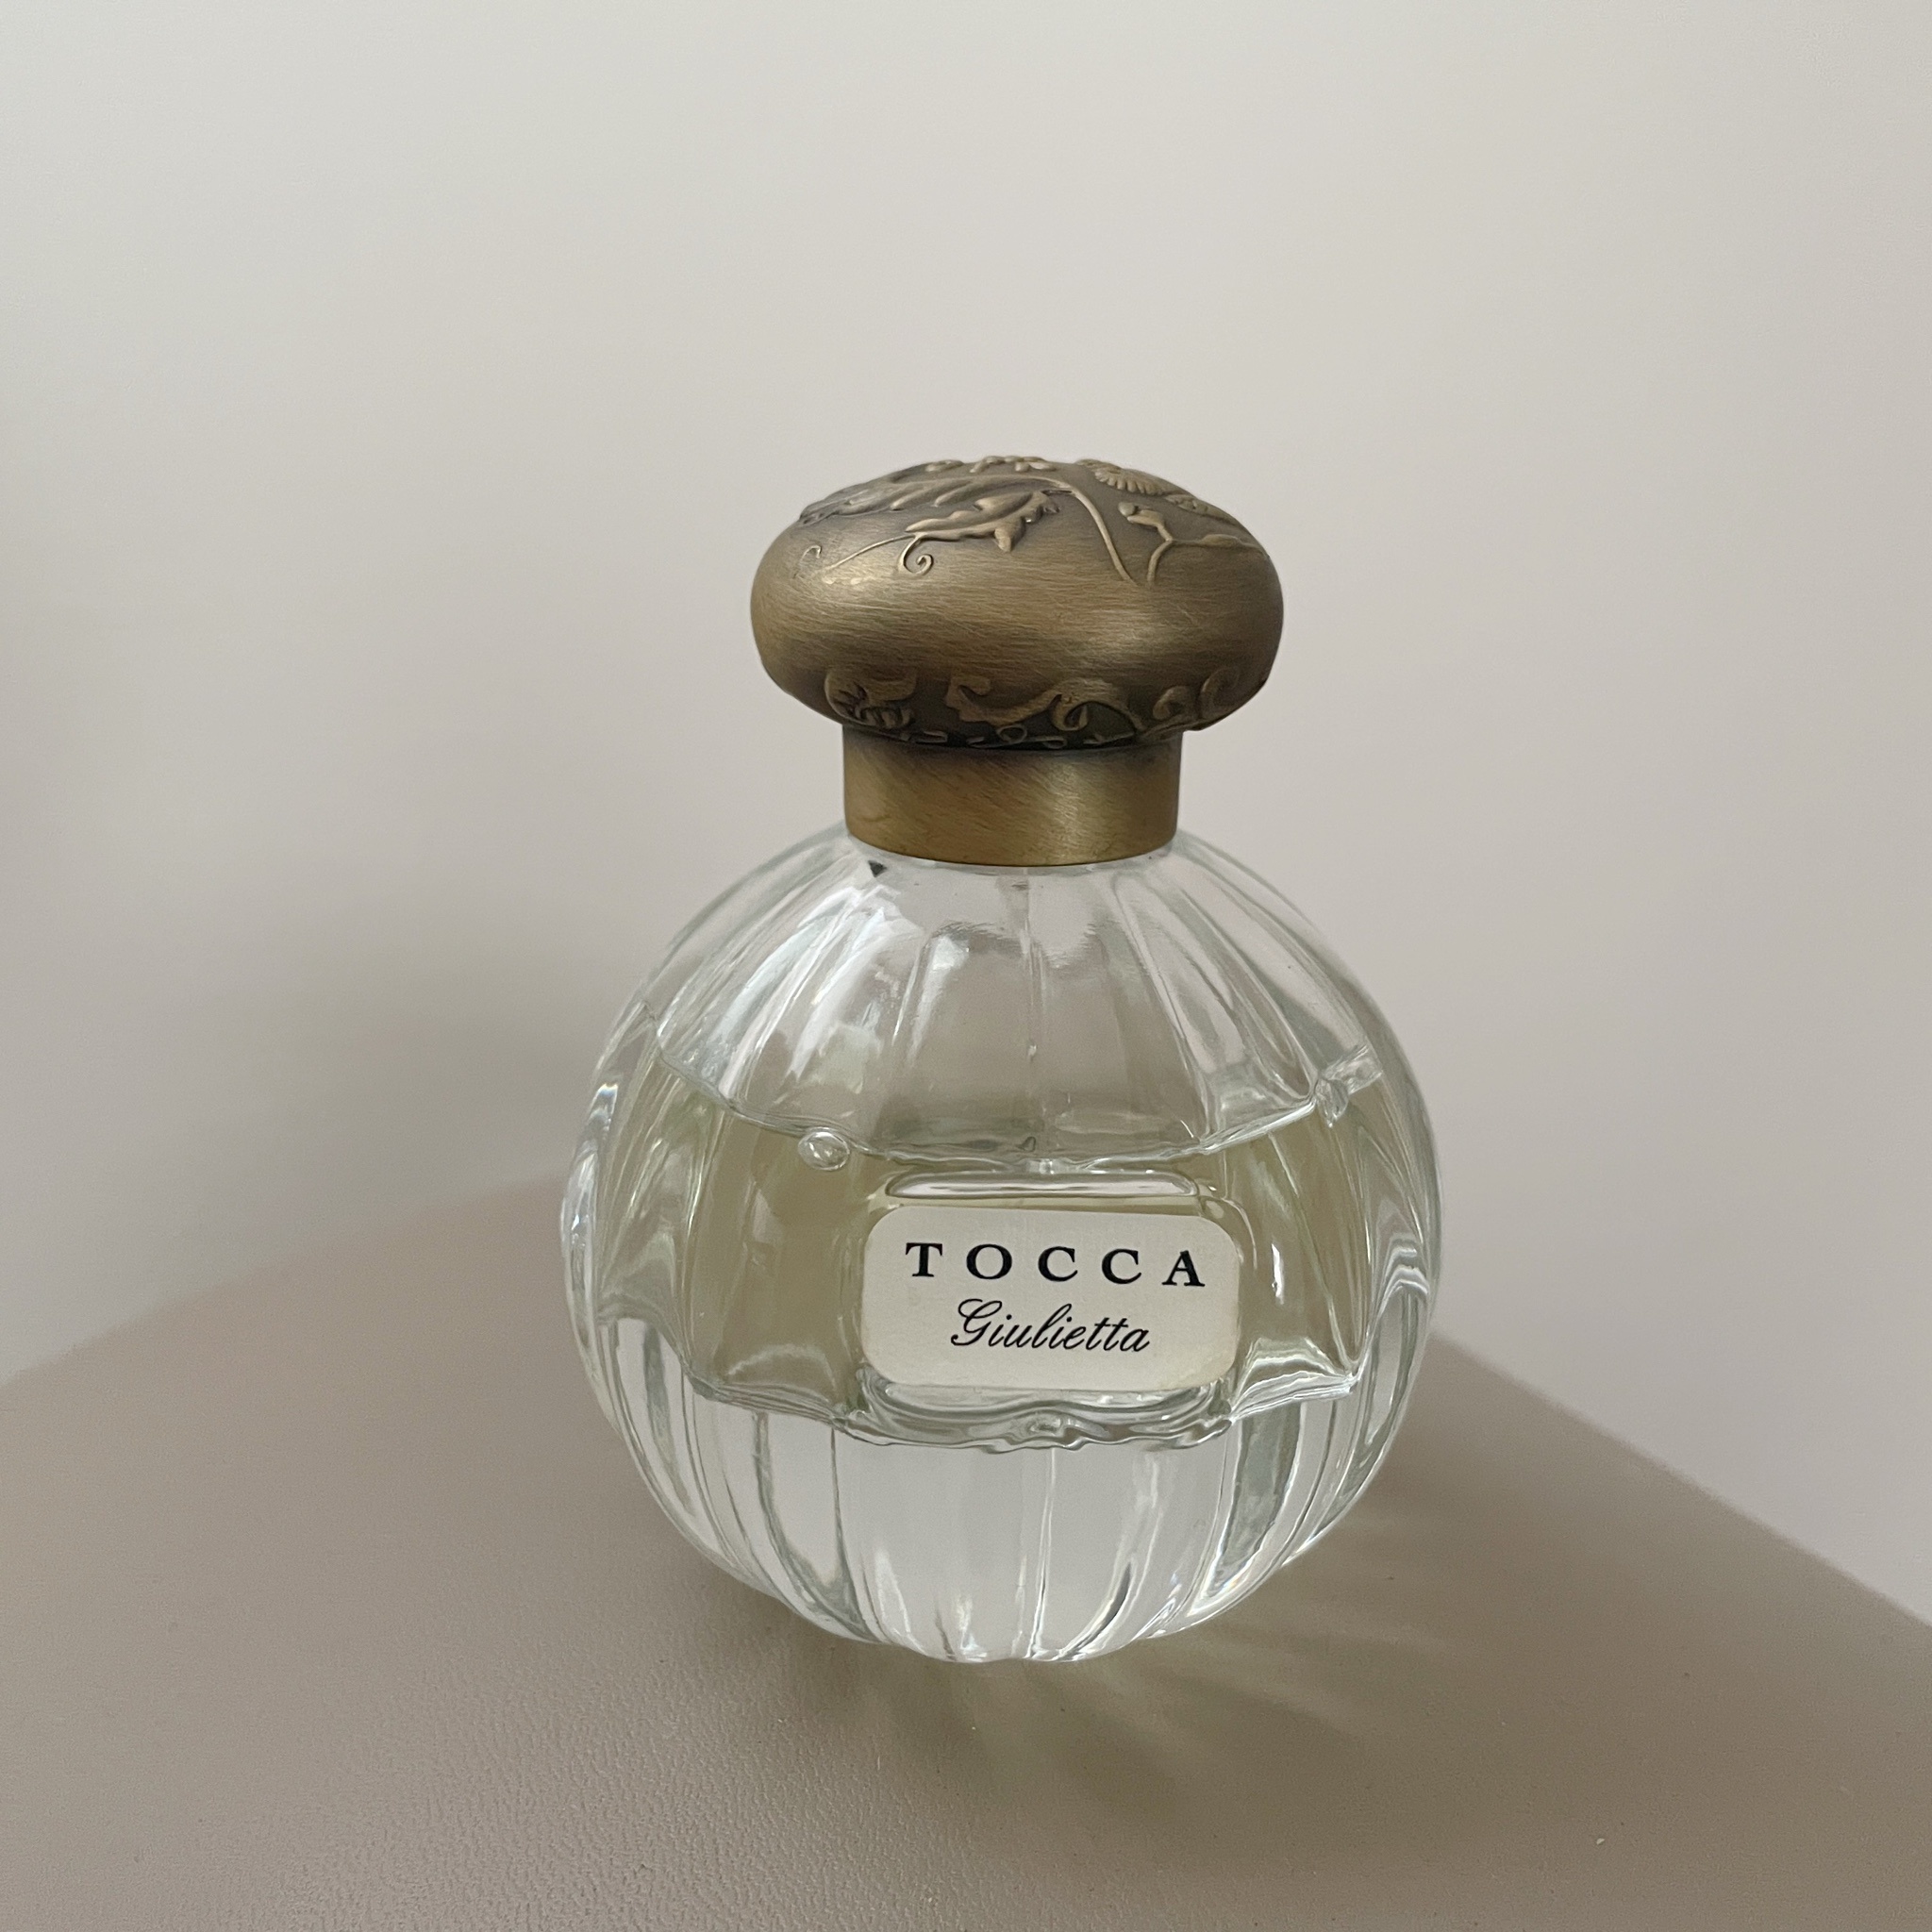 TOCCA(トッカ) / オードパルファム ジュリエッタの香りの公式商品情報